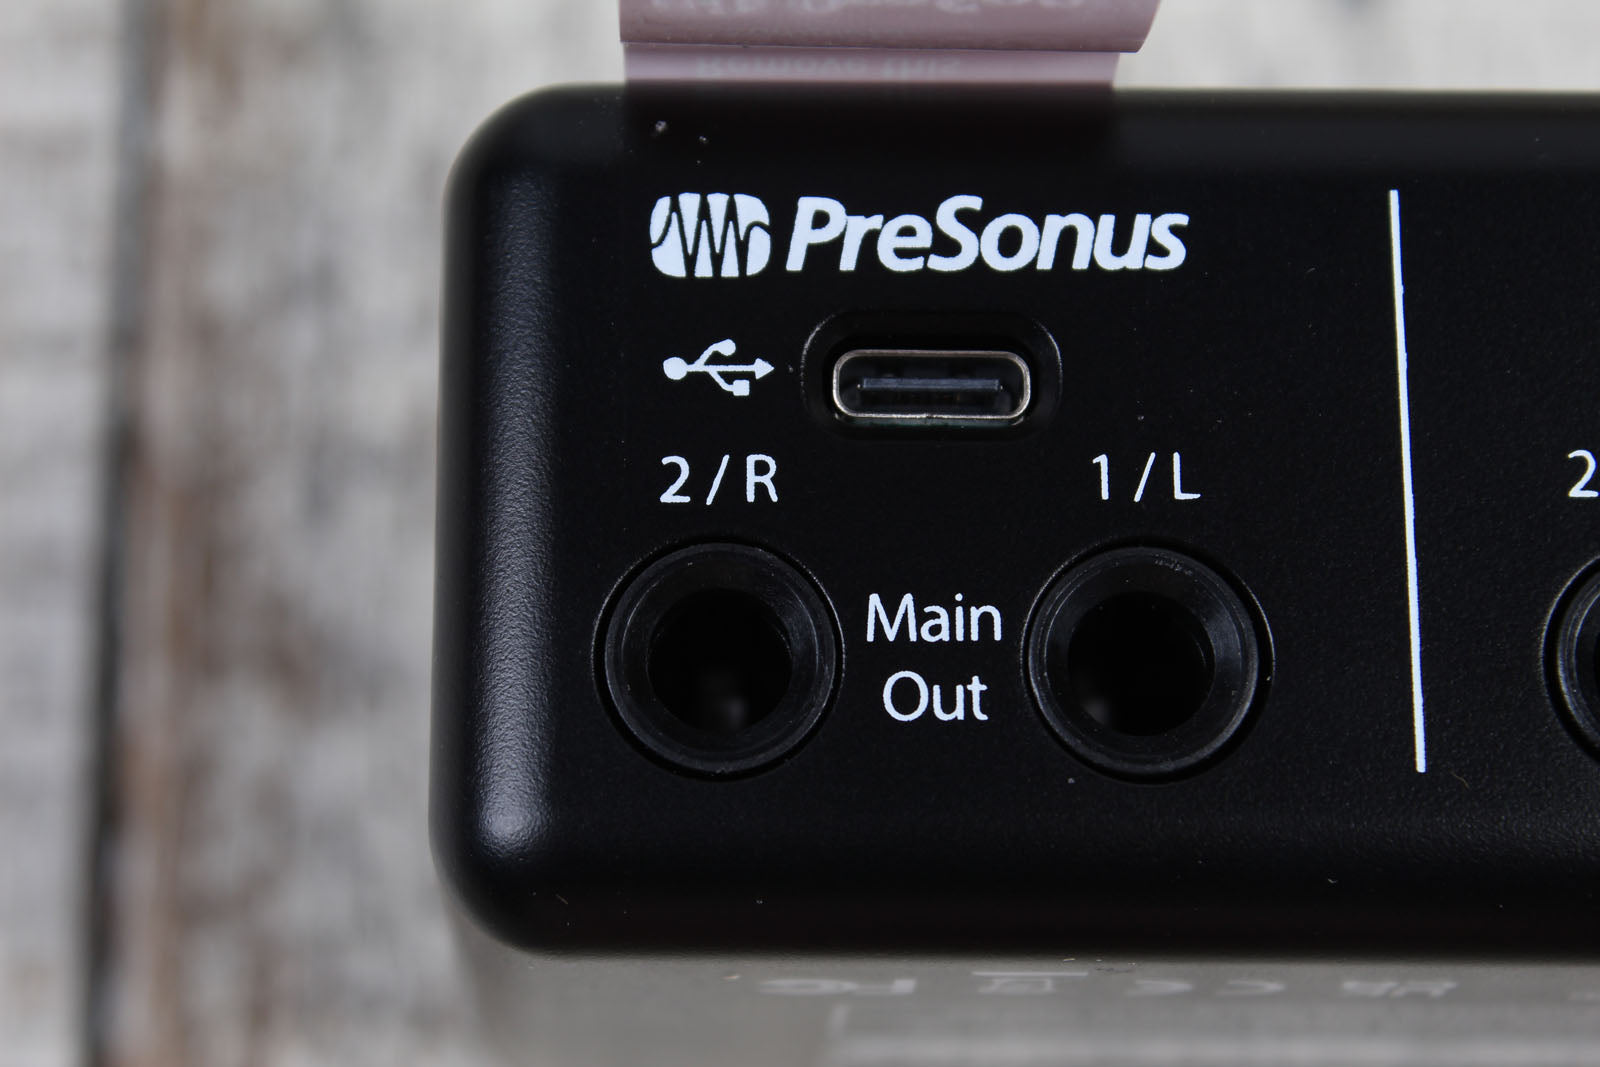 Presonus Launches Ultra-Portable Audiobox GO™ Audio Interface